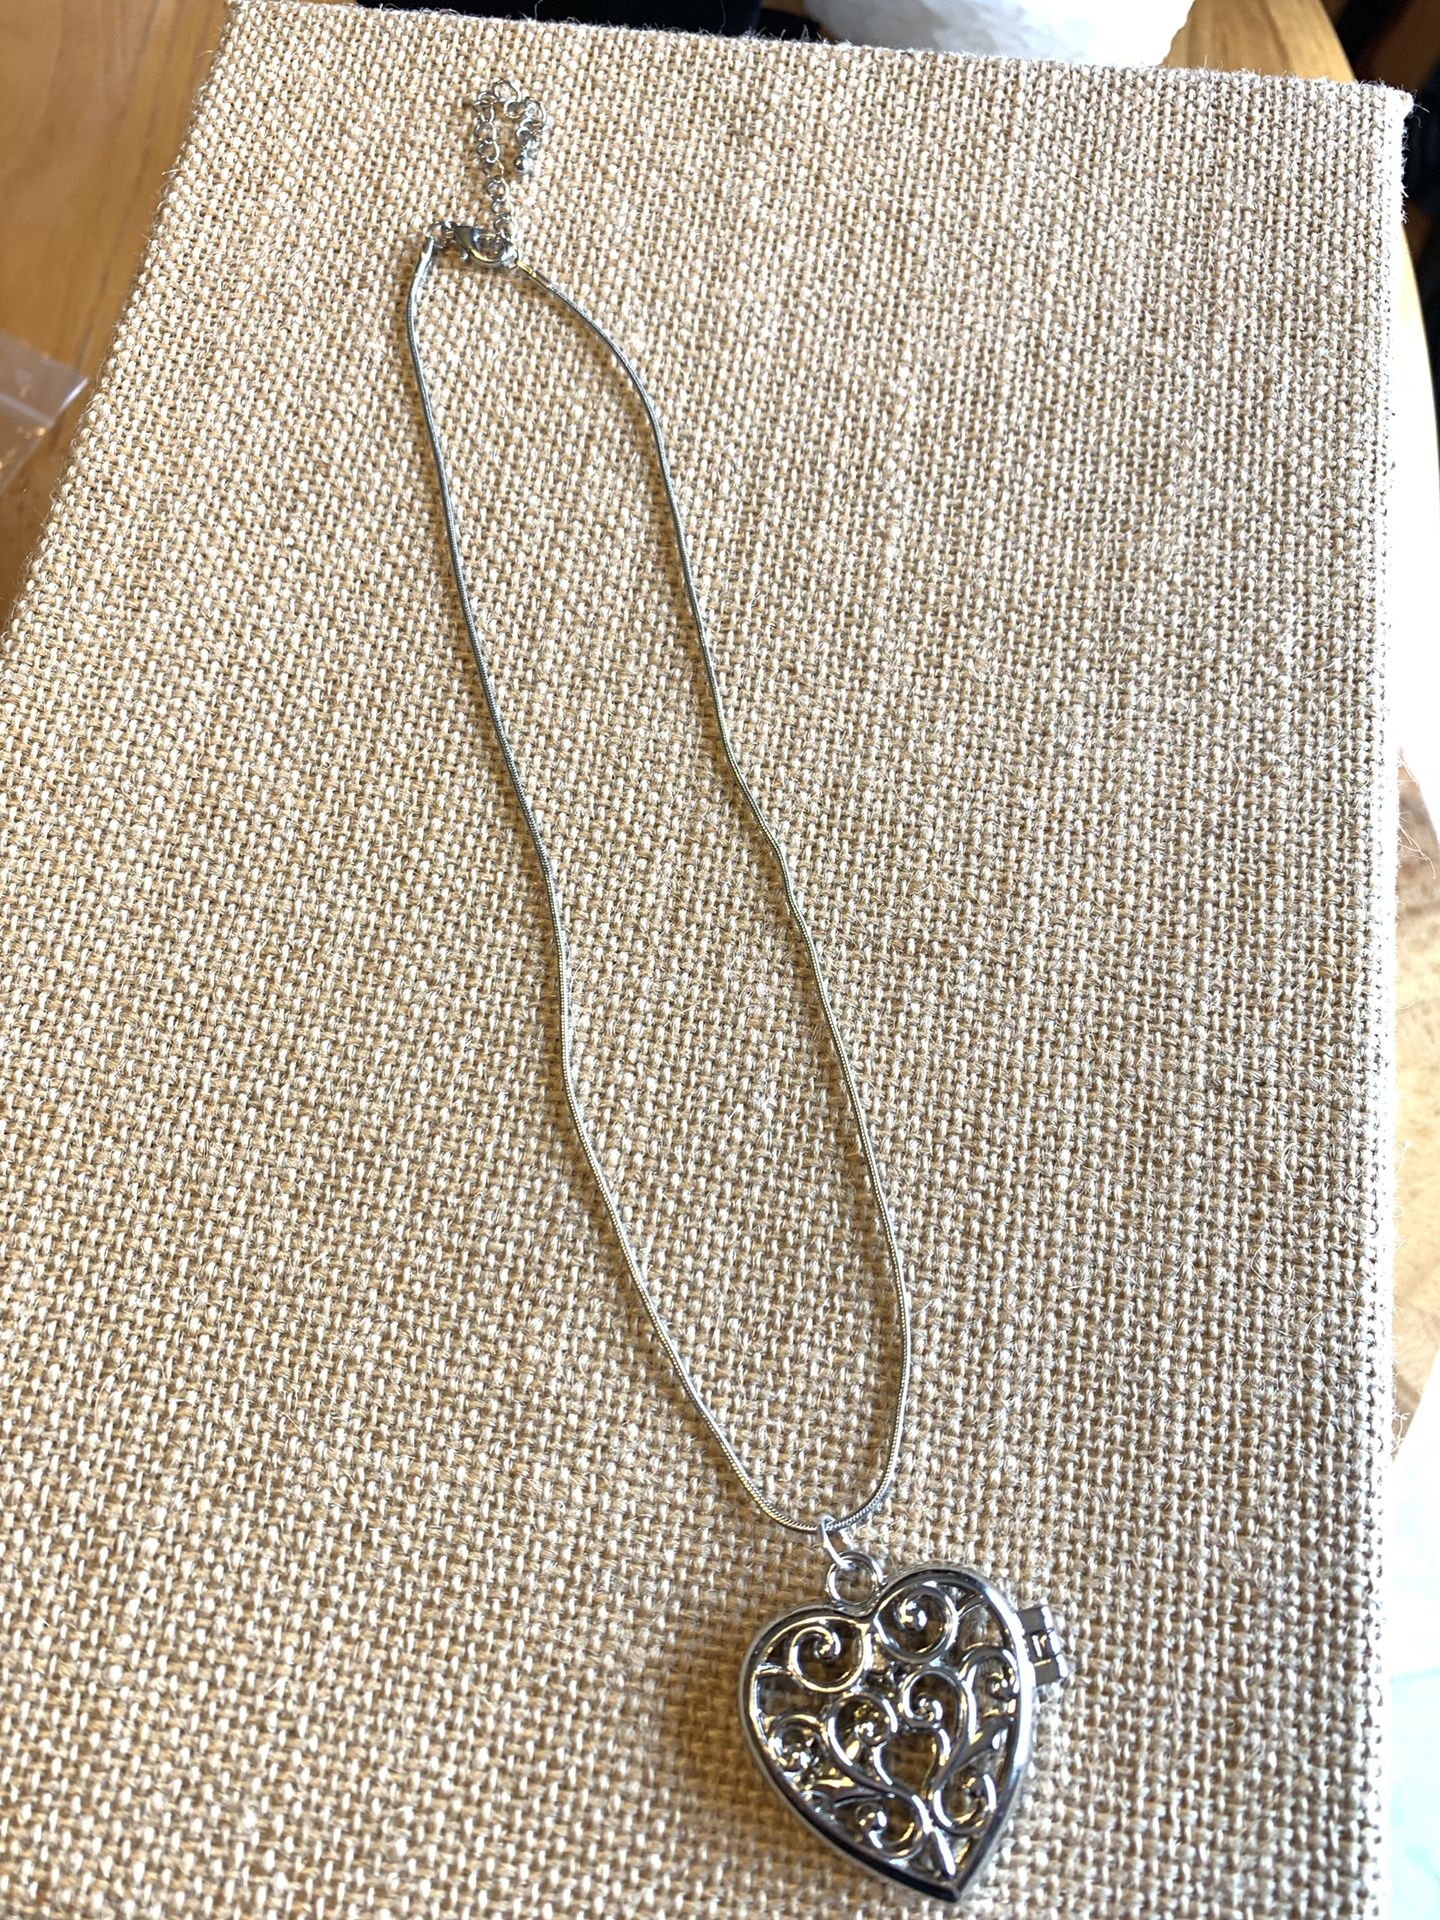 Silver tone/ heart locket necklace